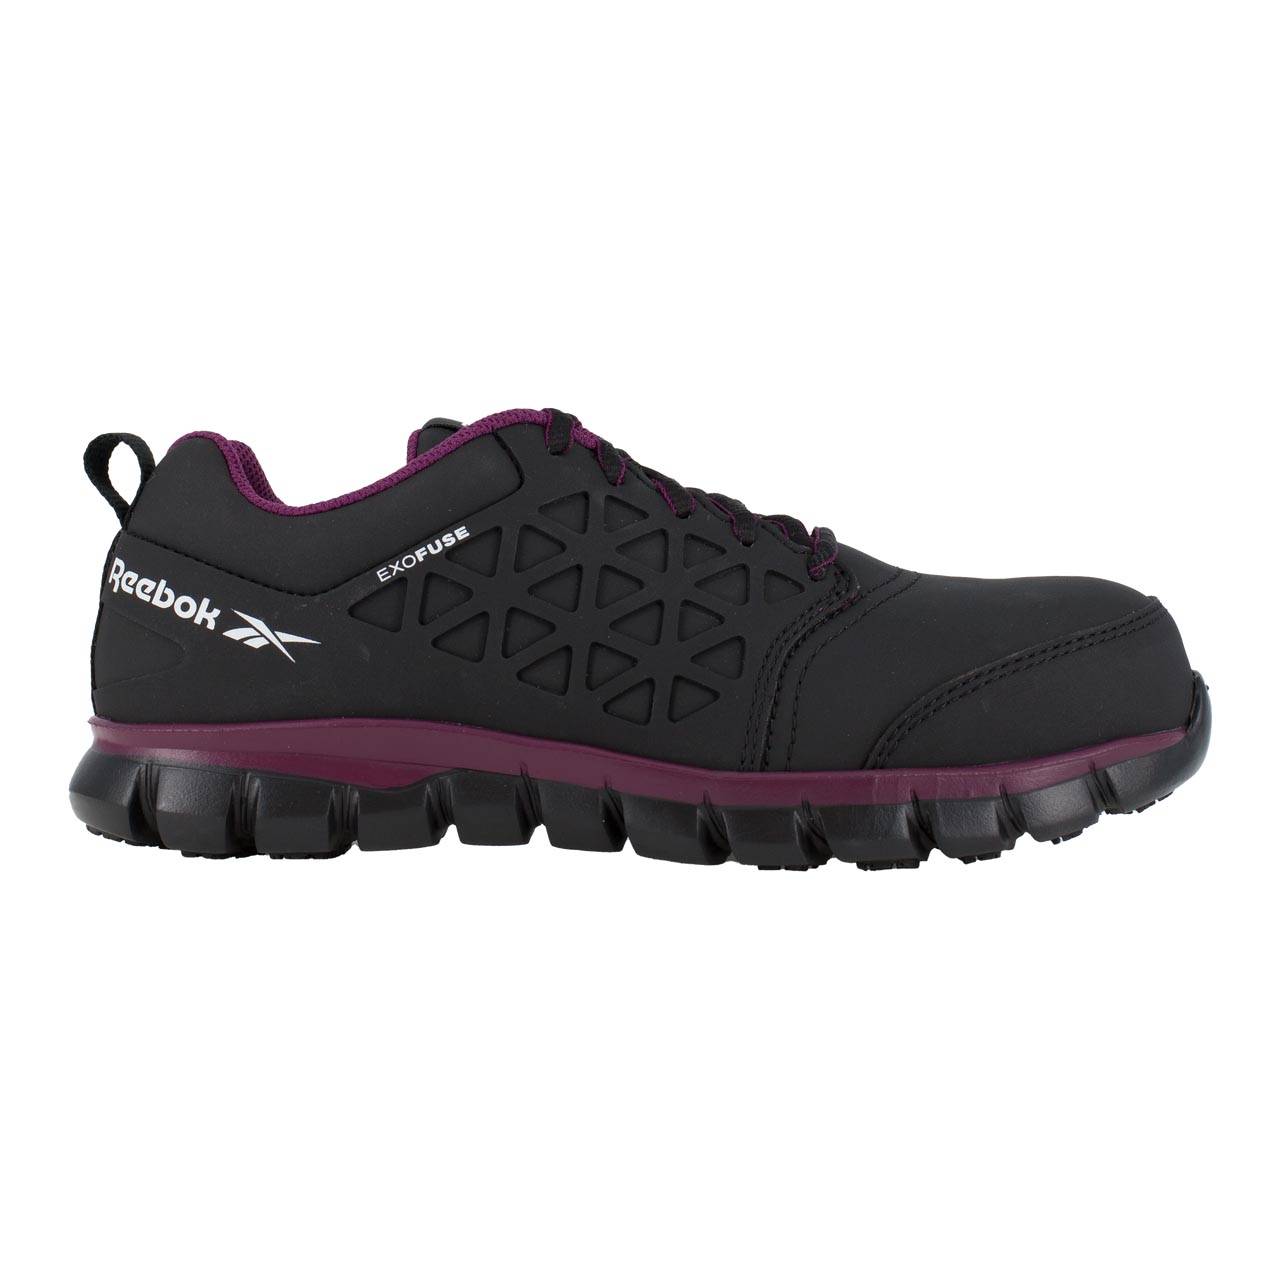 Reebok Women's Sublite Composite Toe Athletic Work Shoes